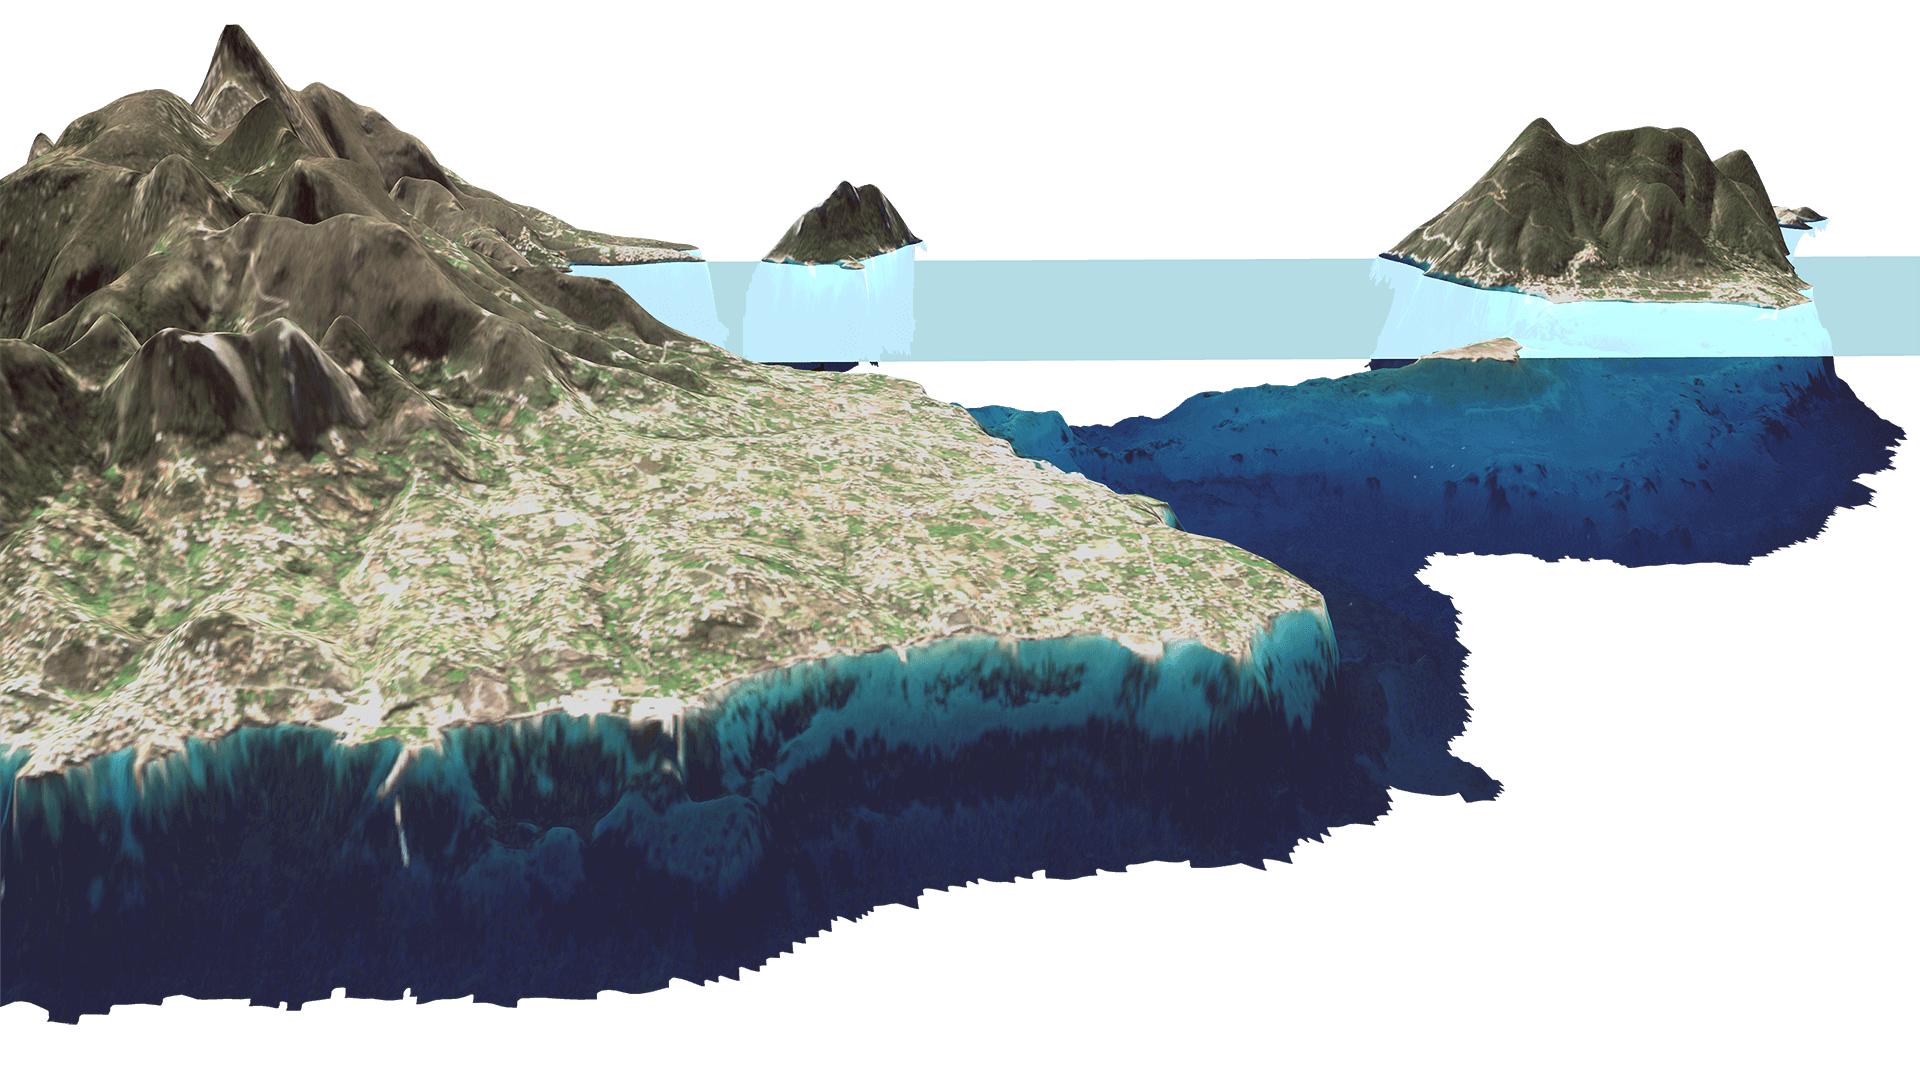 Digital Elevation Model of the coastline of Aegina south of Athens, Greece.